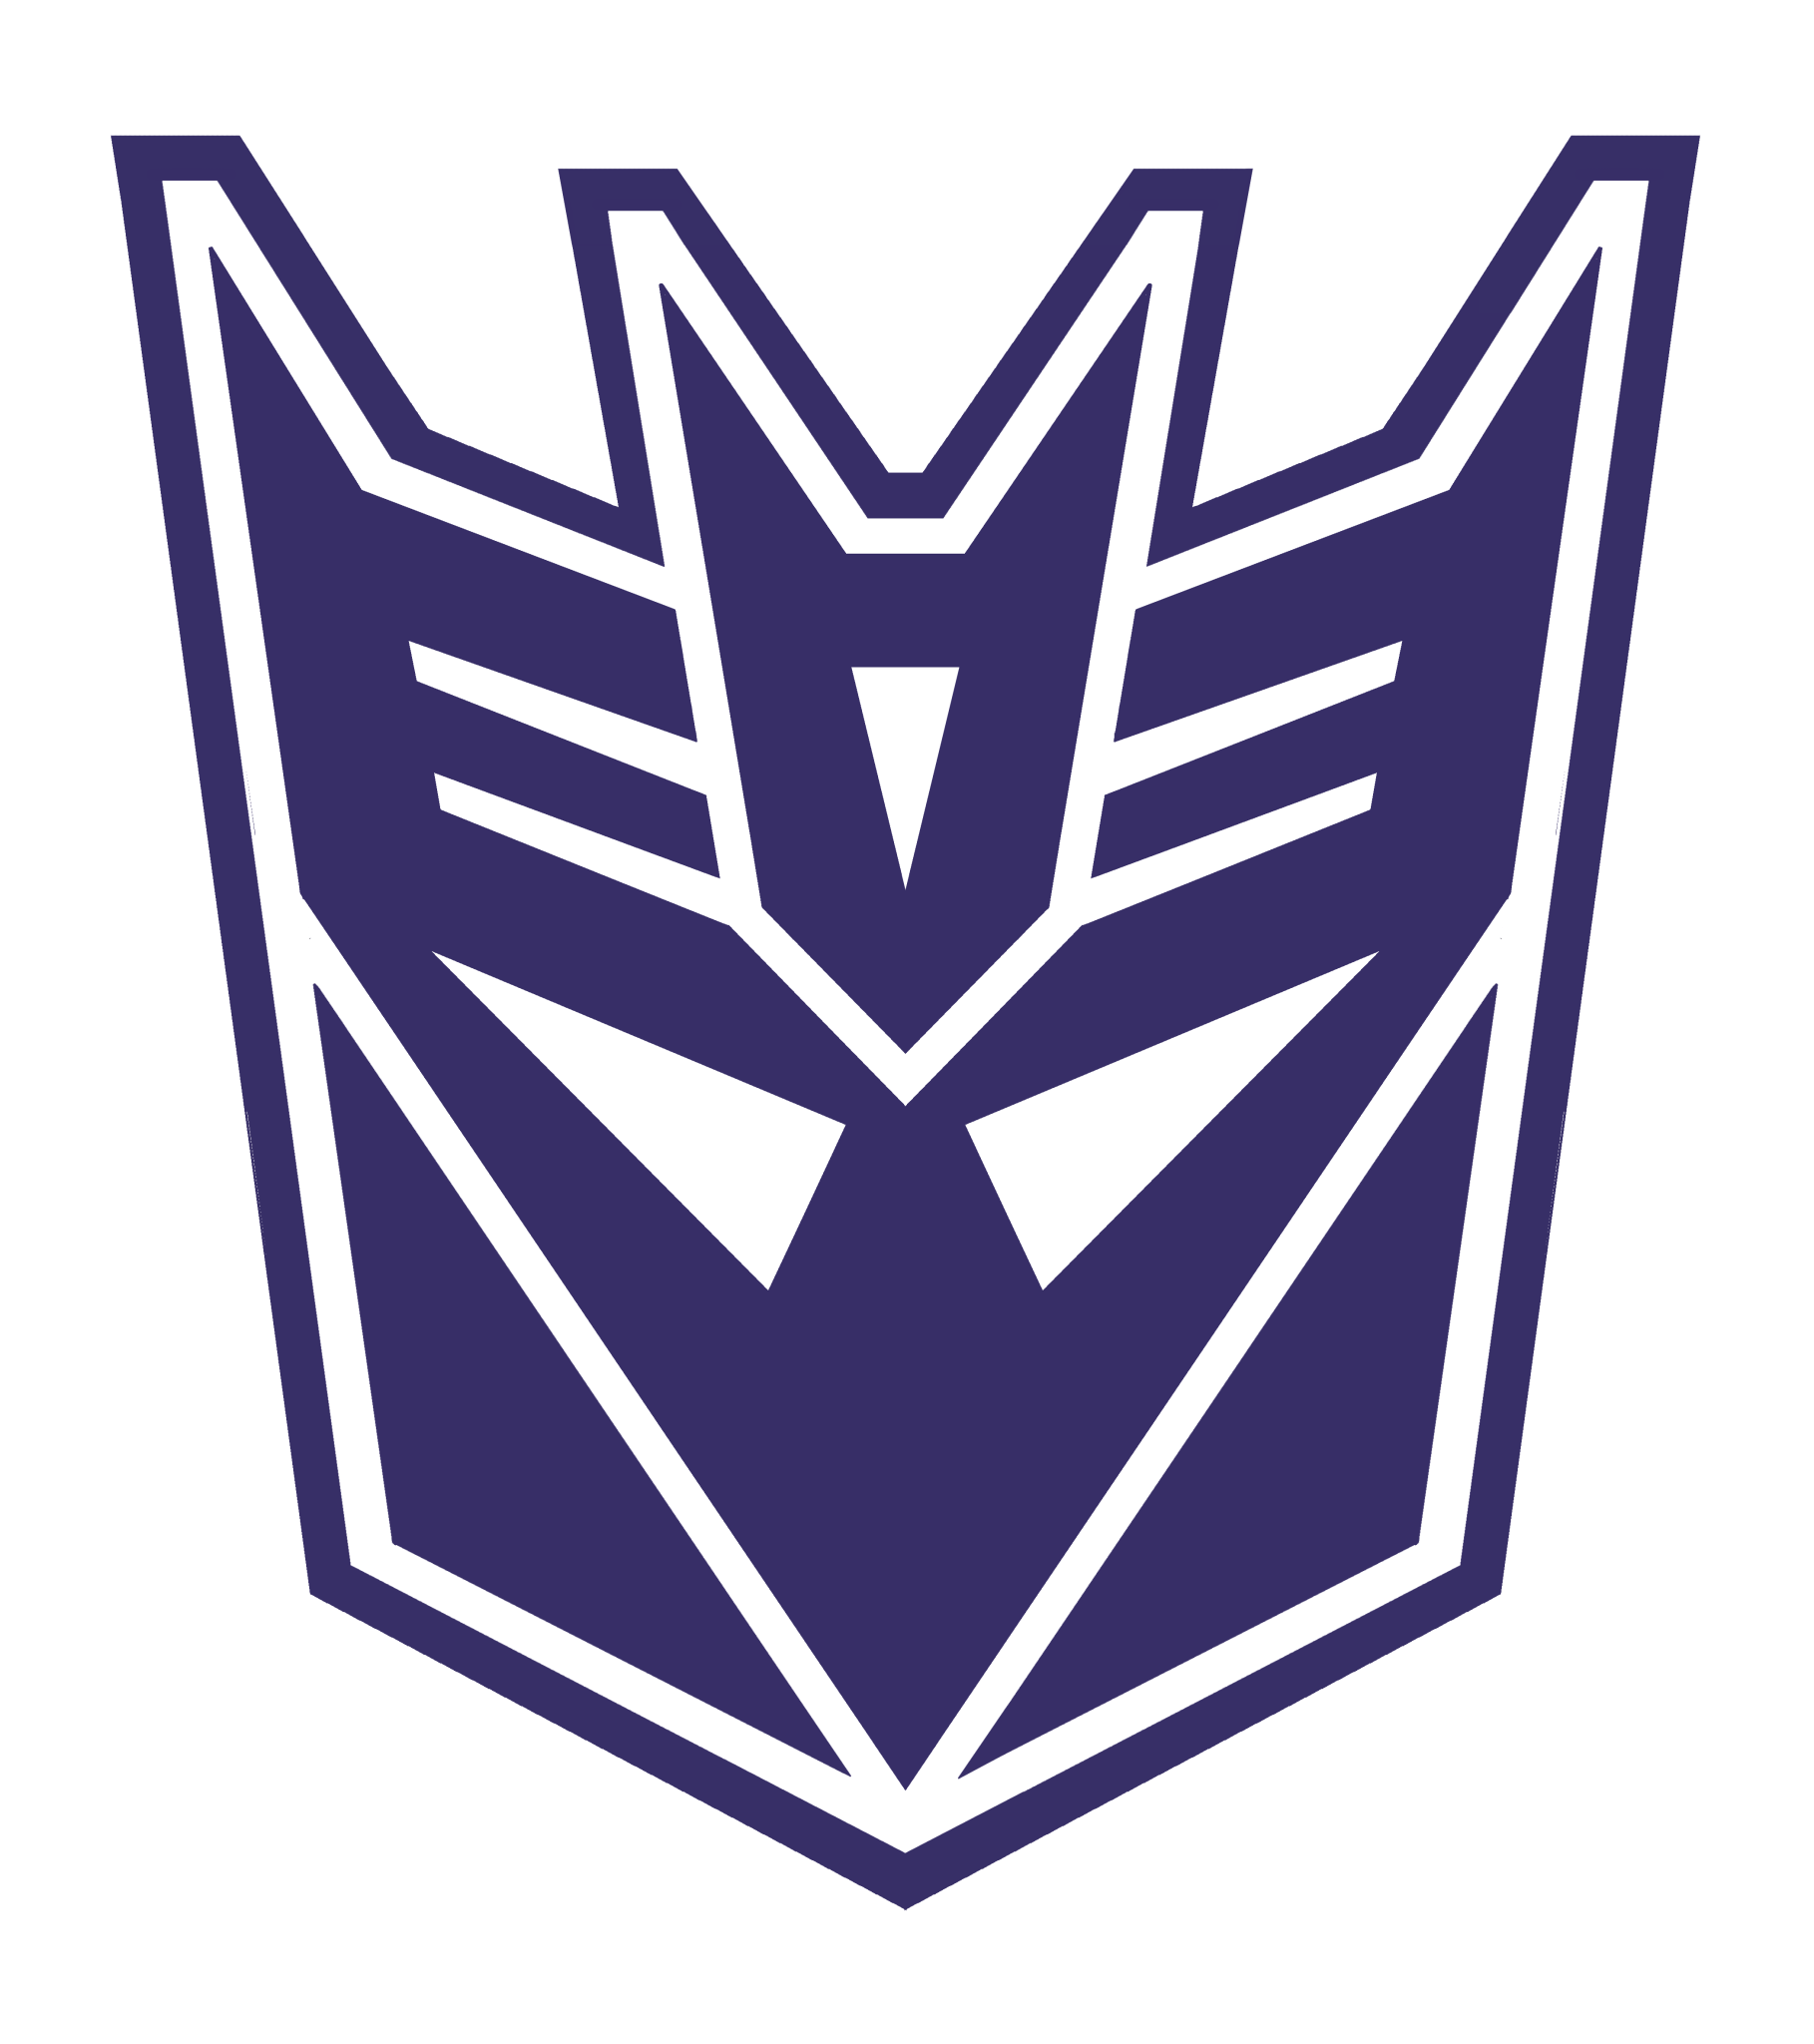 Transformers Autobots and Decepticons Logo - Decepticons | Transformer: Prime Wiki | FANDOM powered by Wikia